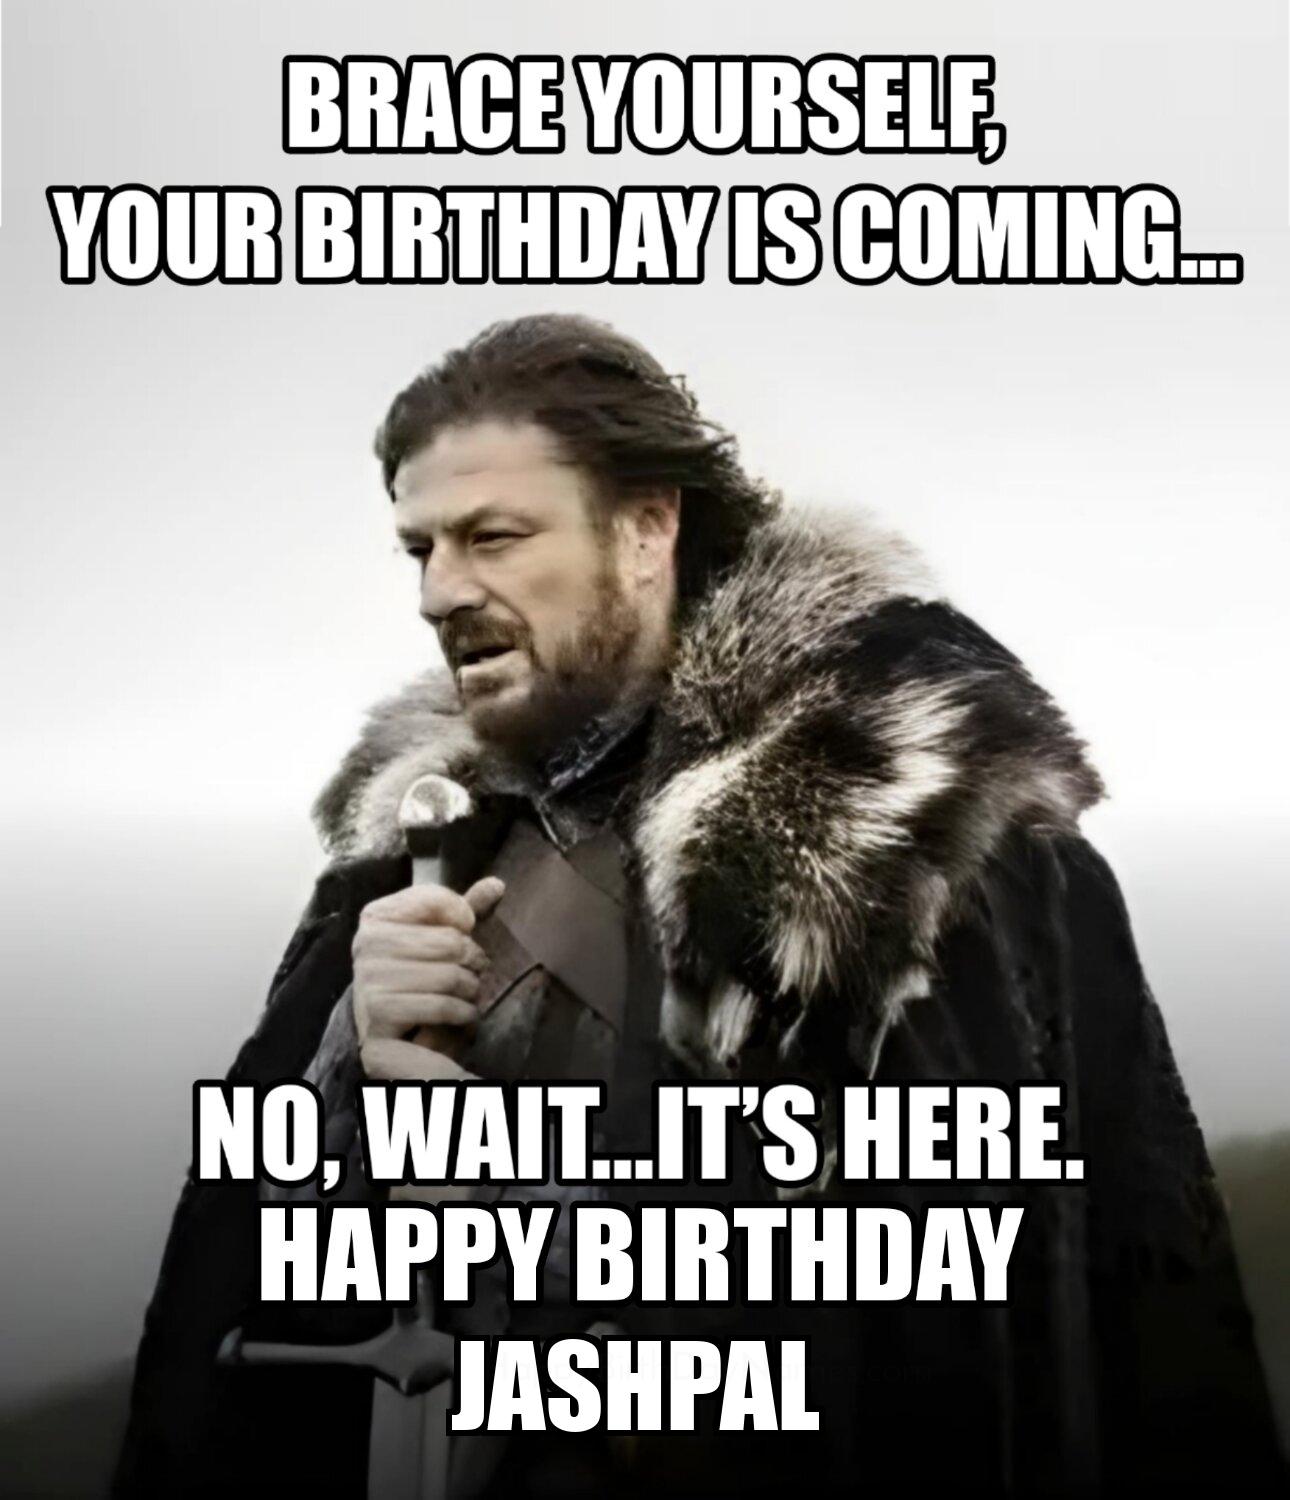 Happy Birthday Jashpal Brace Yourself Your Birthday Is Coming Meme